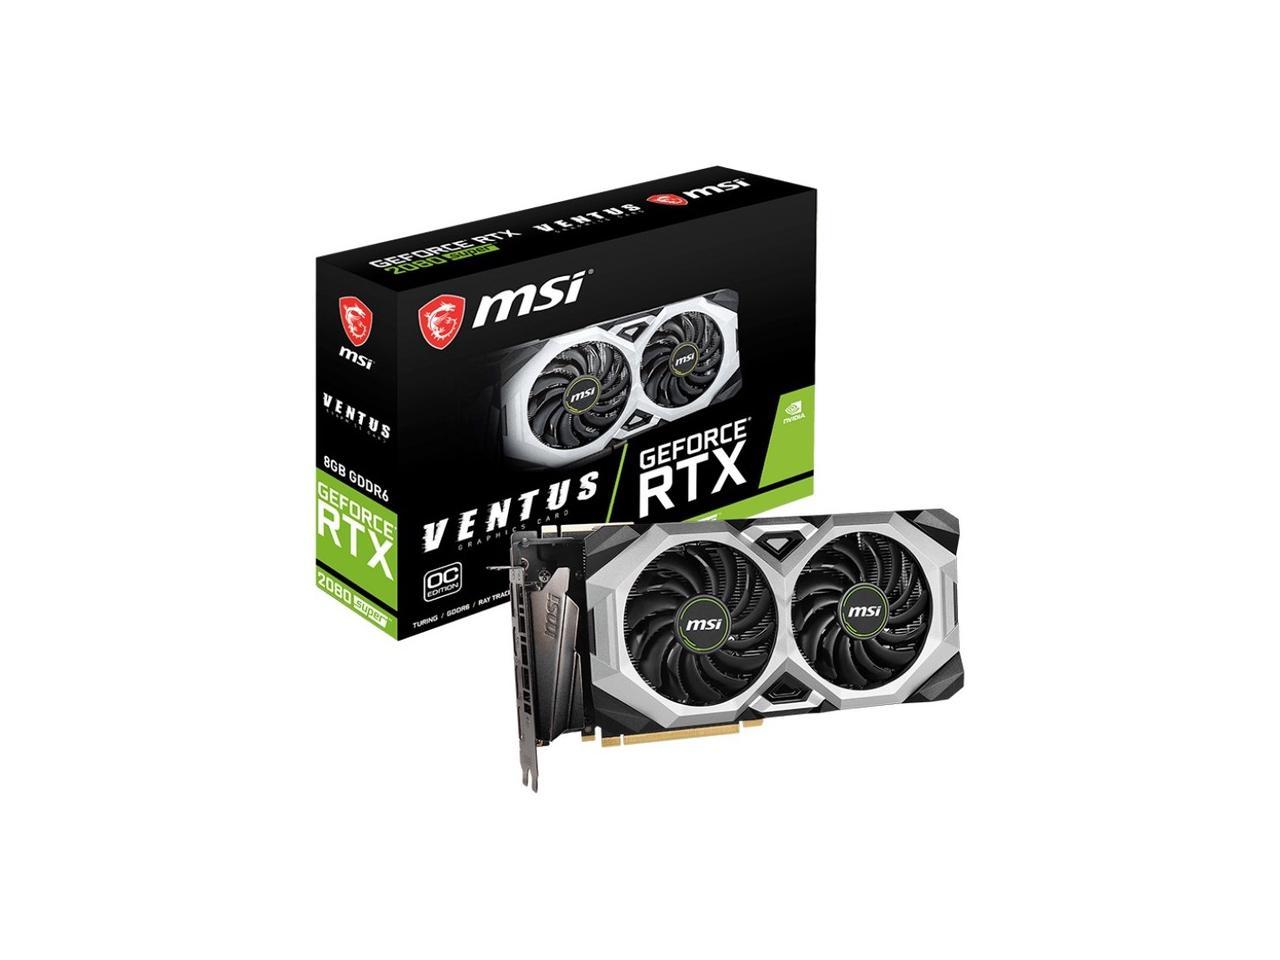 OB] MSI Gaming GeForce RTX 2080 Super 8GB GDRR6 256-Bit (RTX 2080 